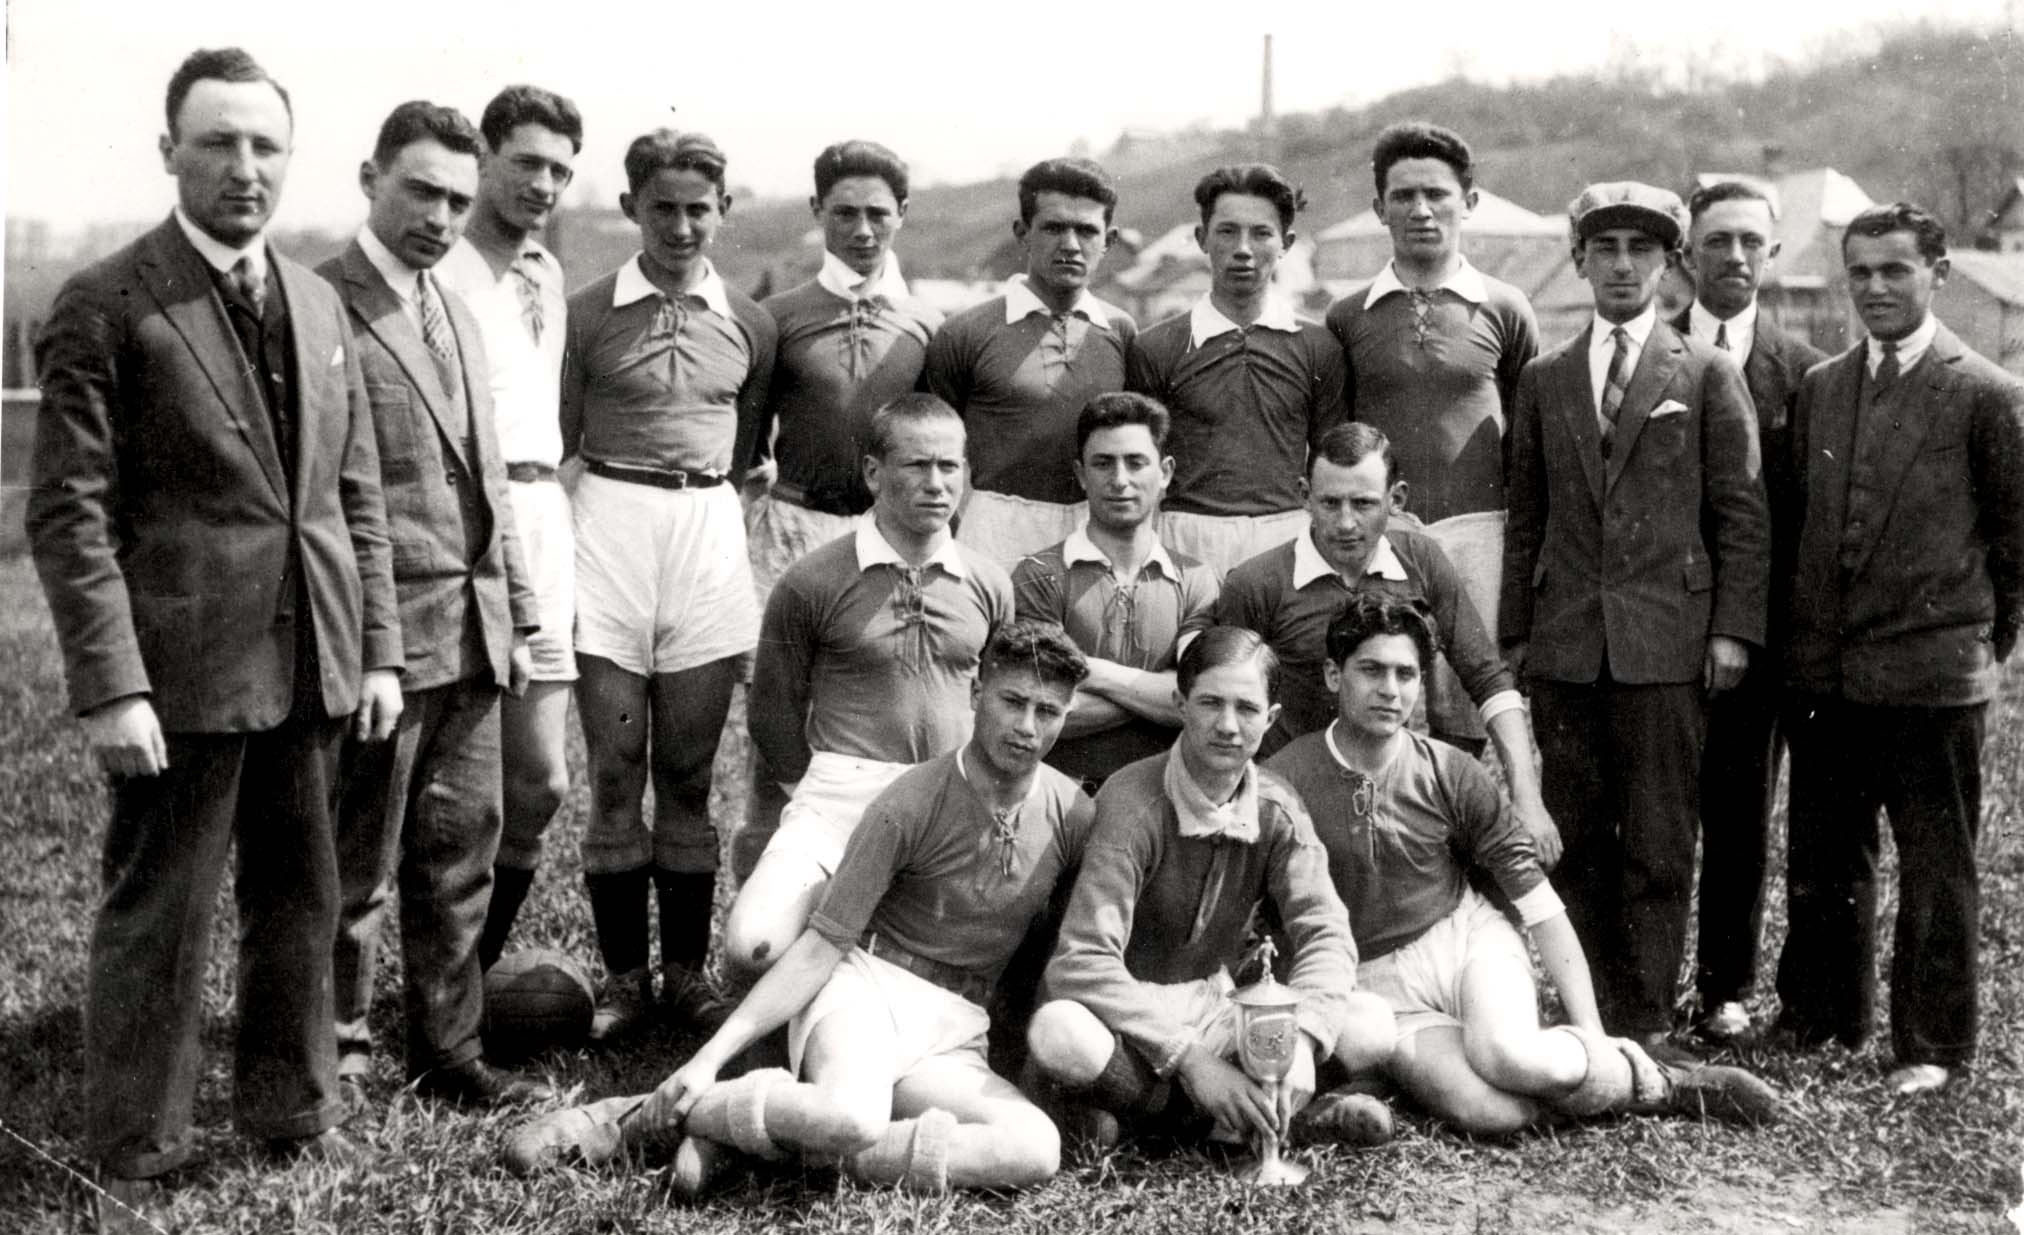 Kaunas,  Lituania, 1936. El equipo de fútbol de "Maccabi"